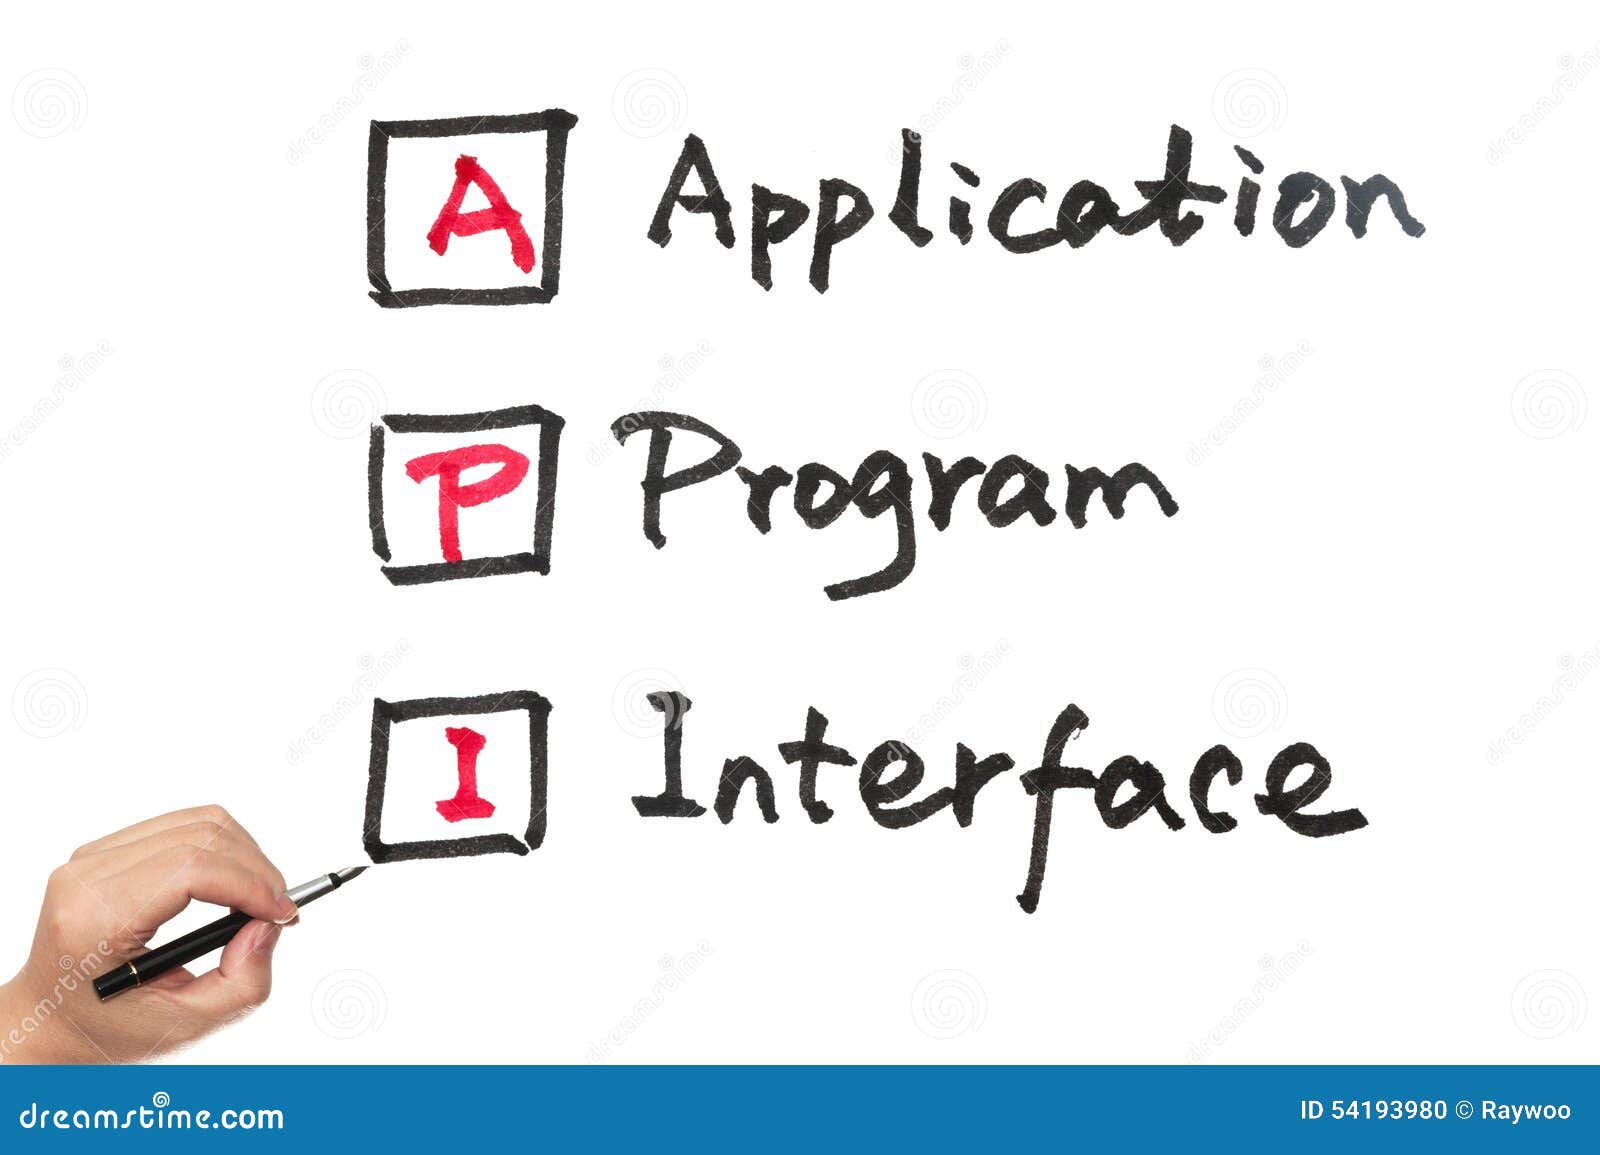 api - application program interface